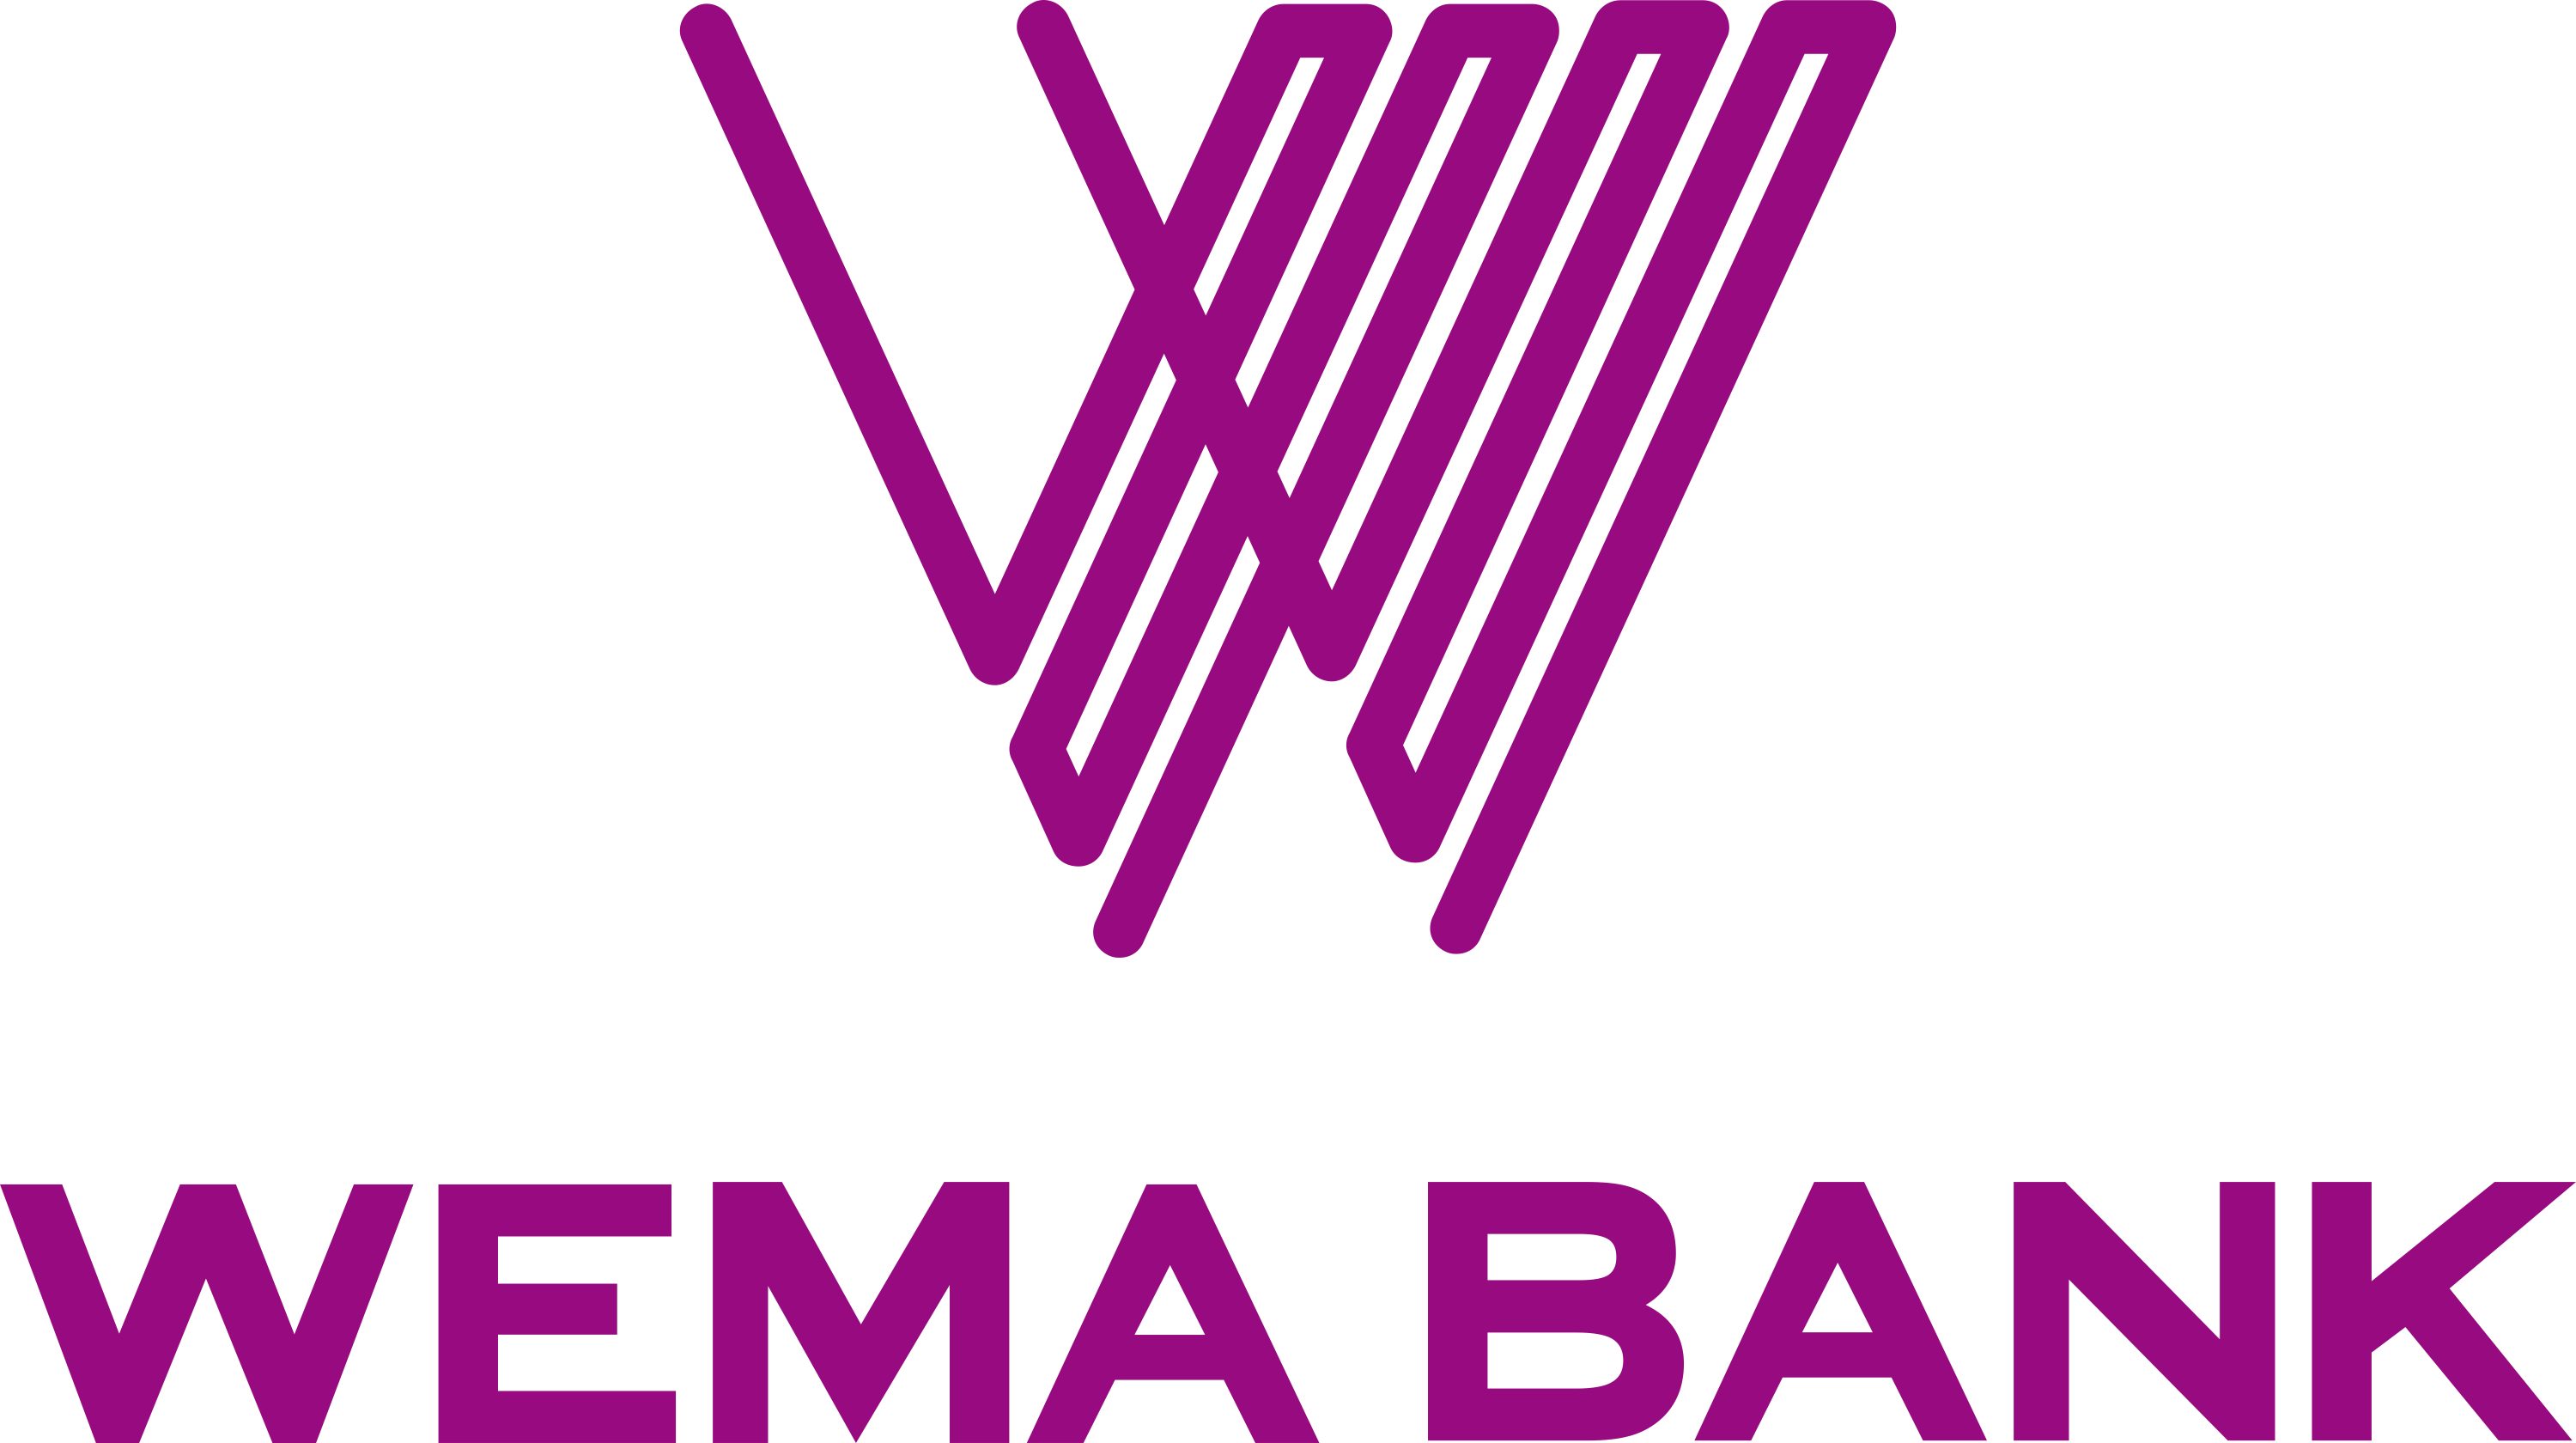 Wema Bank CEO